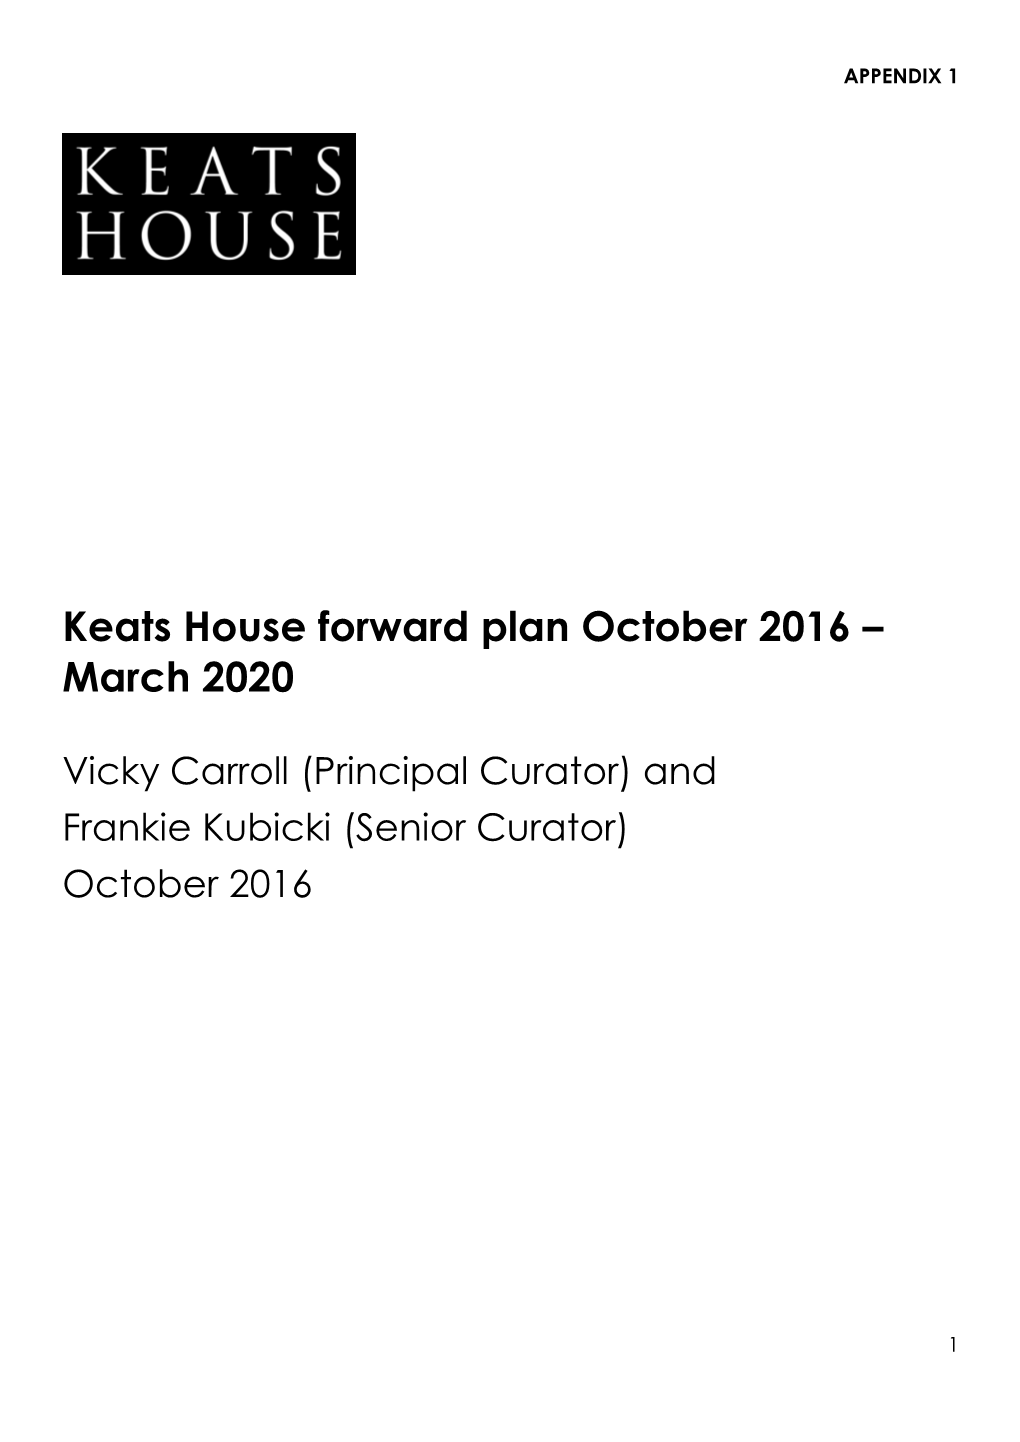 Keats House Forward Plan October 2016 – March 2020